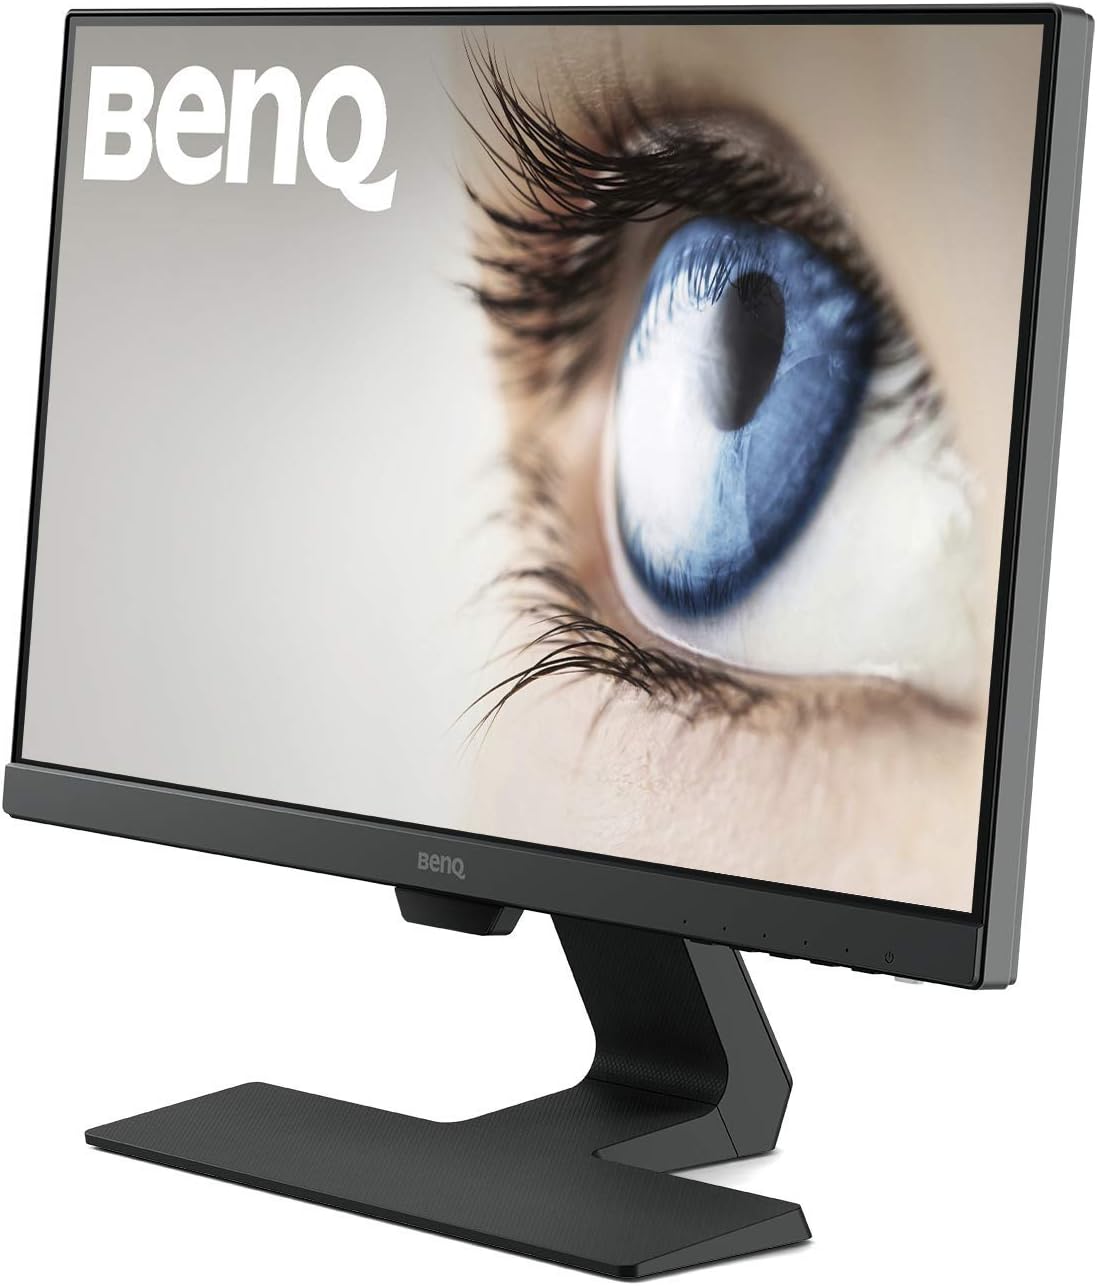 BenQ 22'' IPS 1080p Monitor | Adaptive Brightness Technology